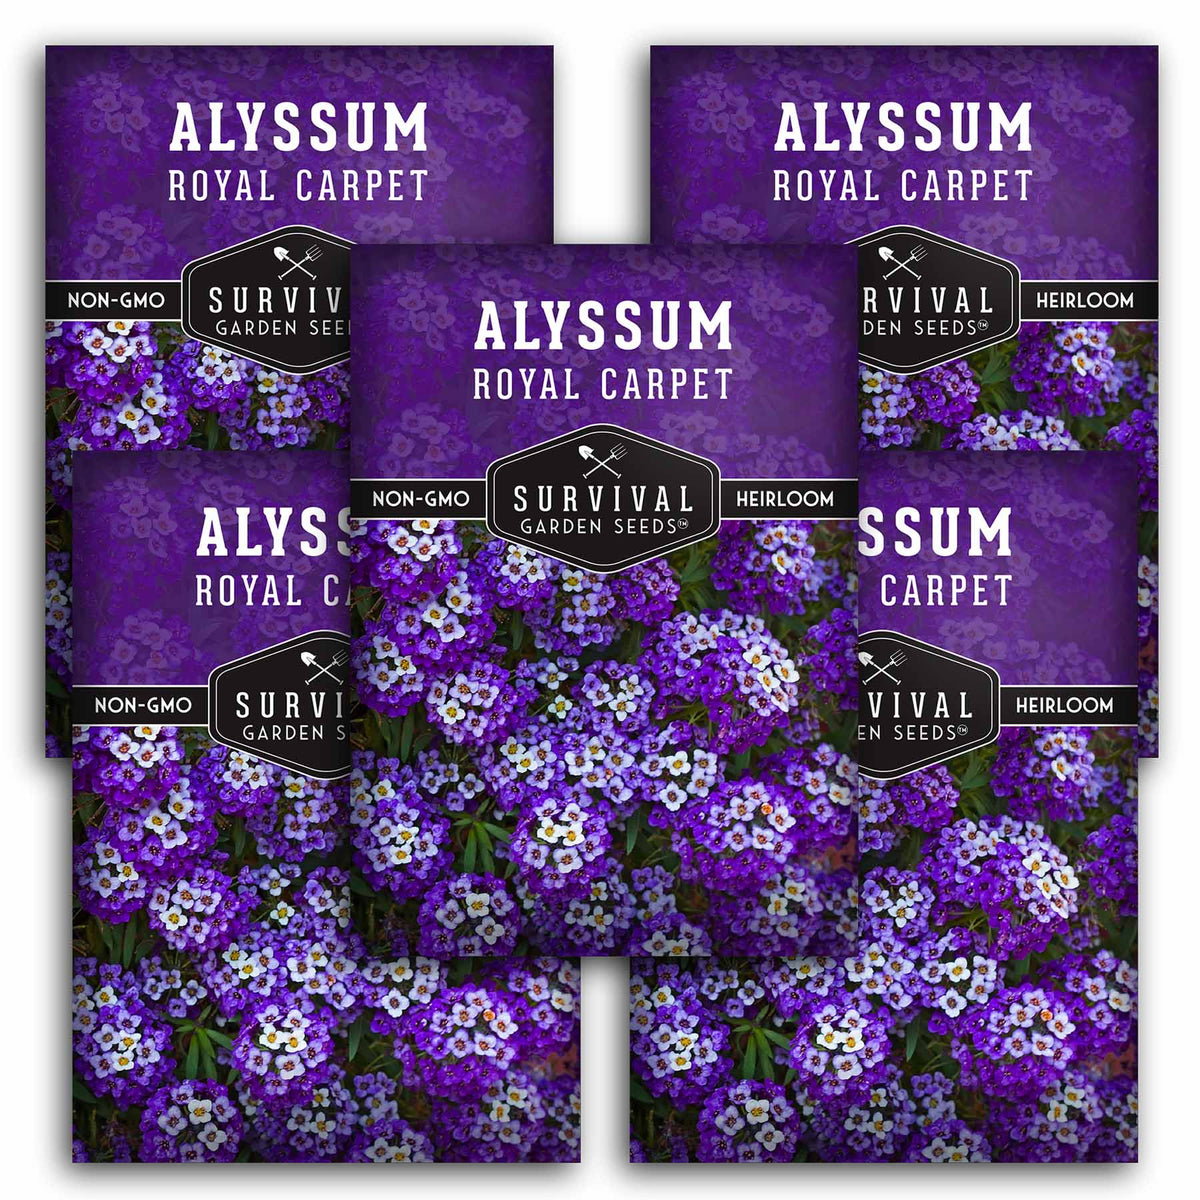 5 packets of Royal Carpet Alyssum seeds